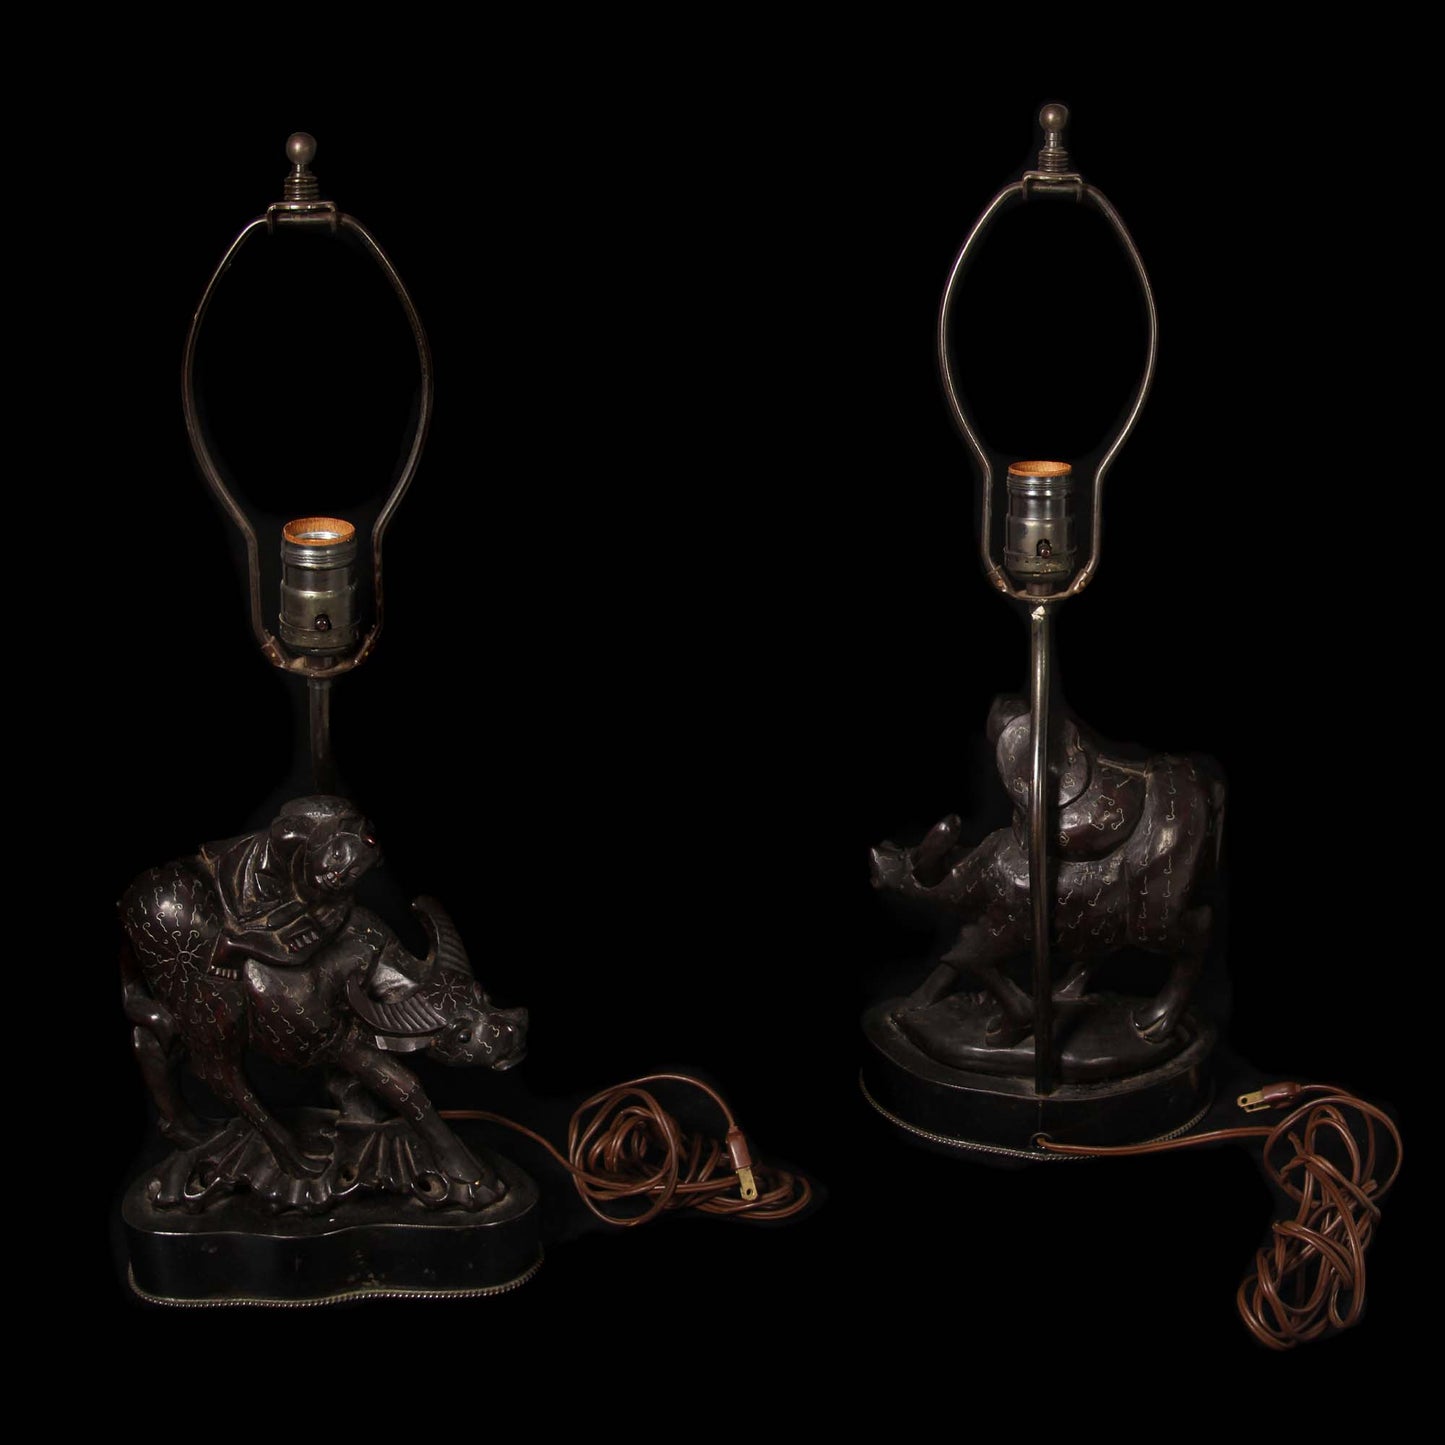 Water Buffalo Lamps - Set of 2